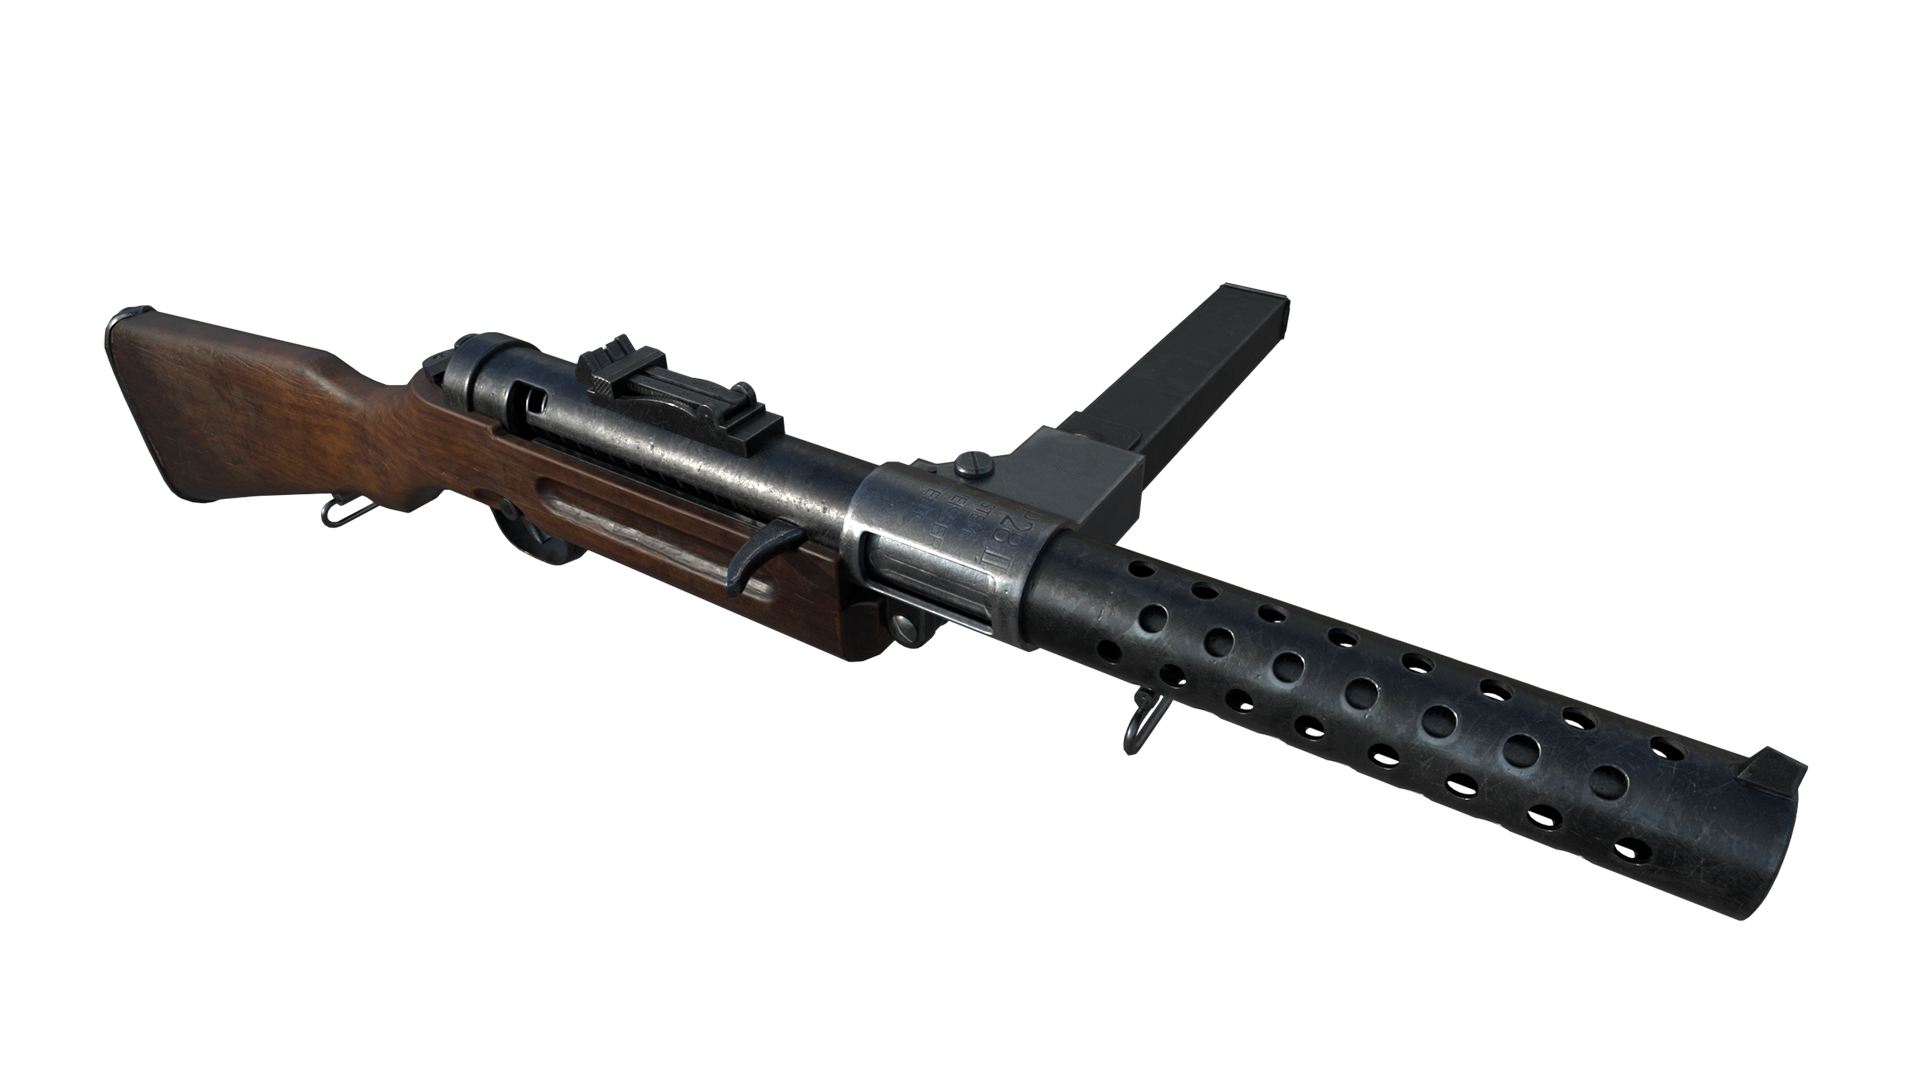 Call of Duty: WW2 PC Beta Update Nerfs SMG Damage, STG44 Assault Rifle